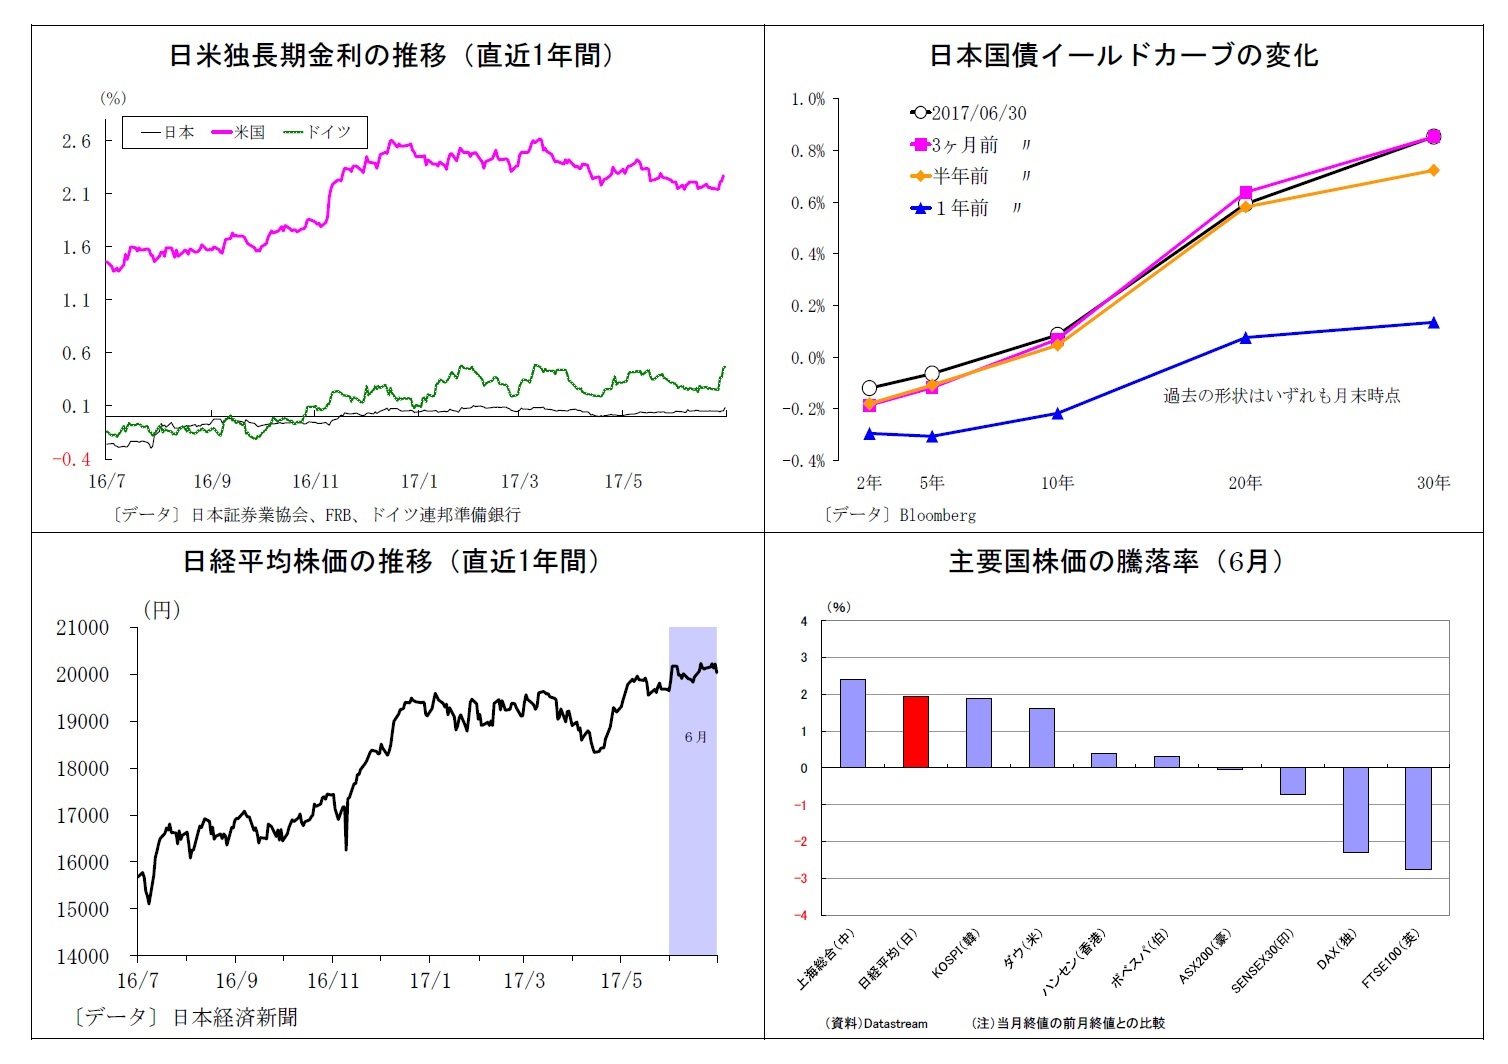 日米独長期金利の推移（直近1年間）/日本国債イールドカーブの変化/日経平均株価の推移（直近1年間）/主要国株価の騰落率（6月）